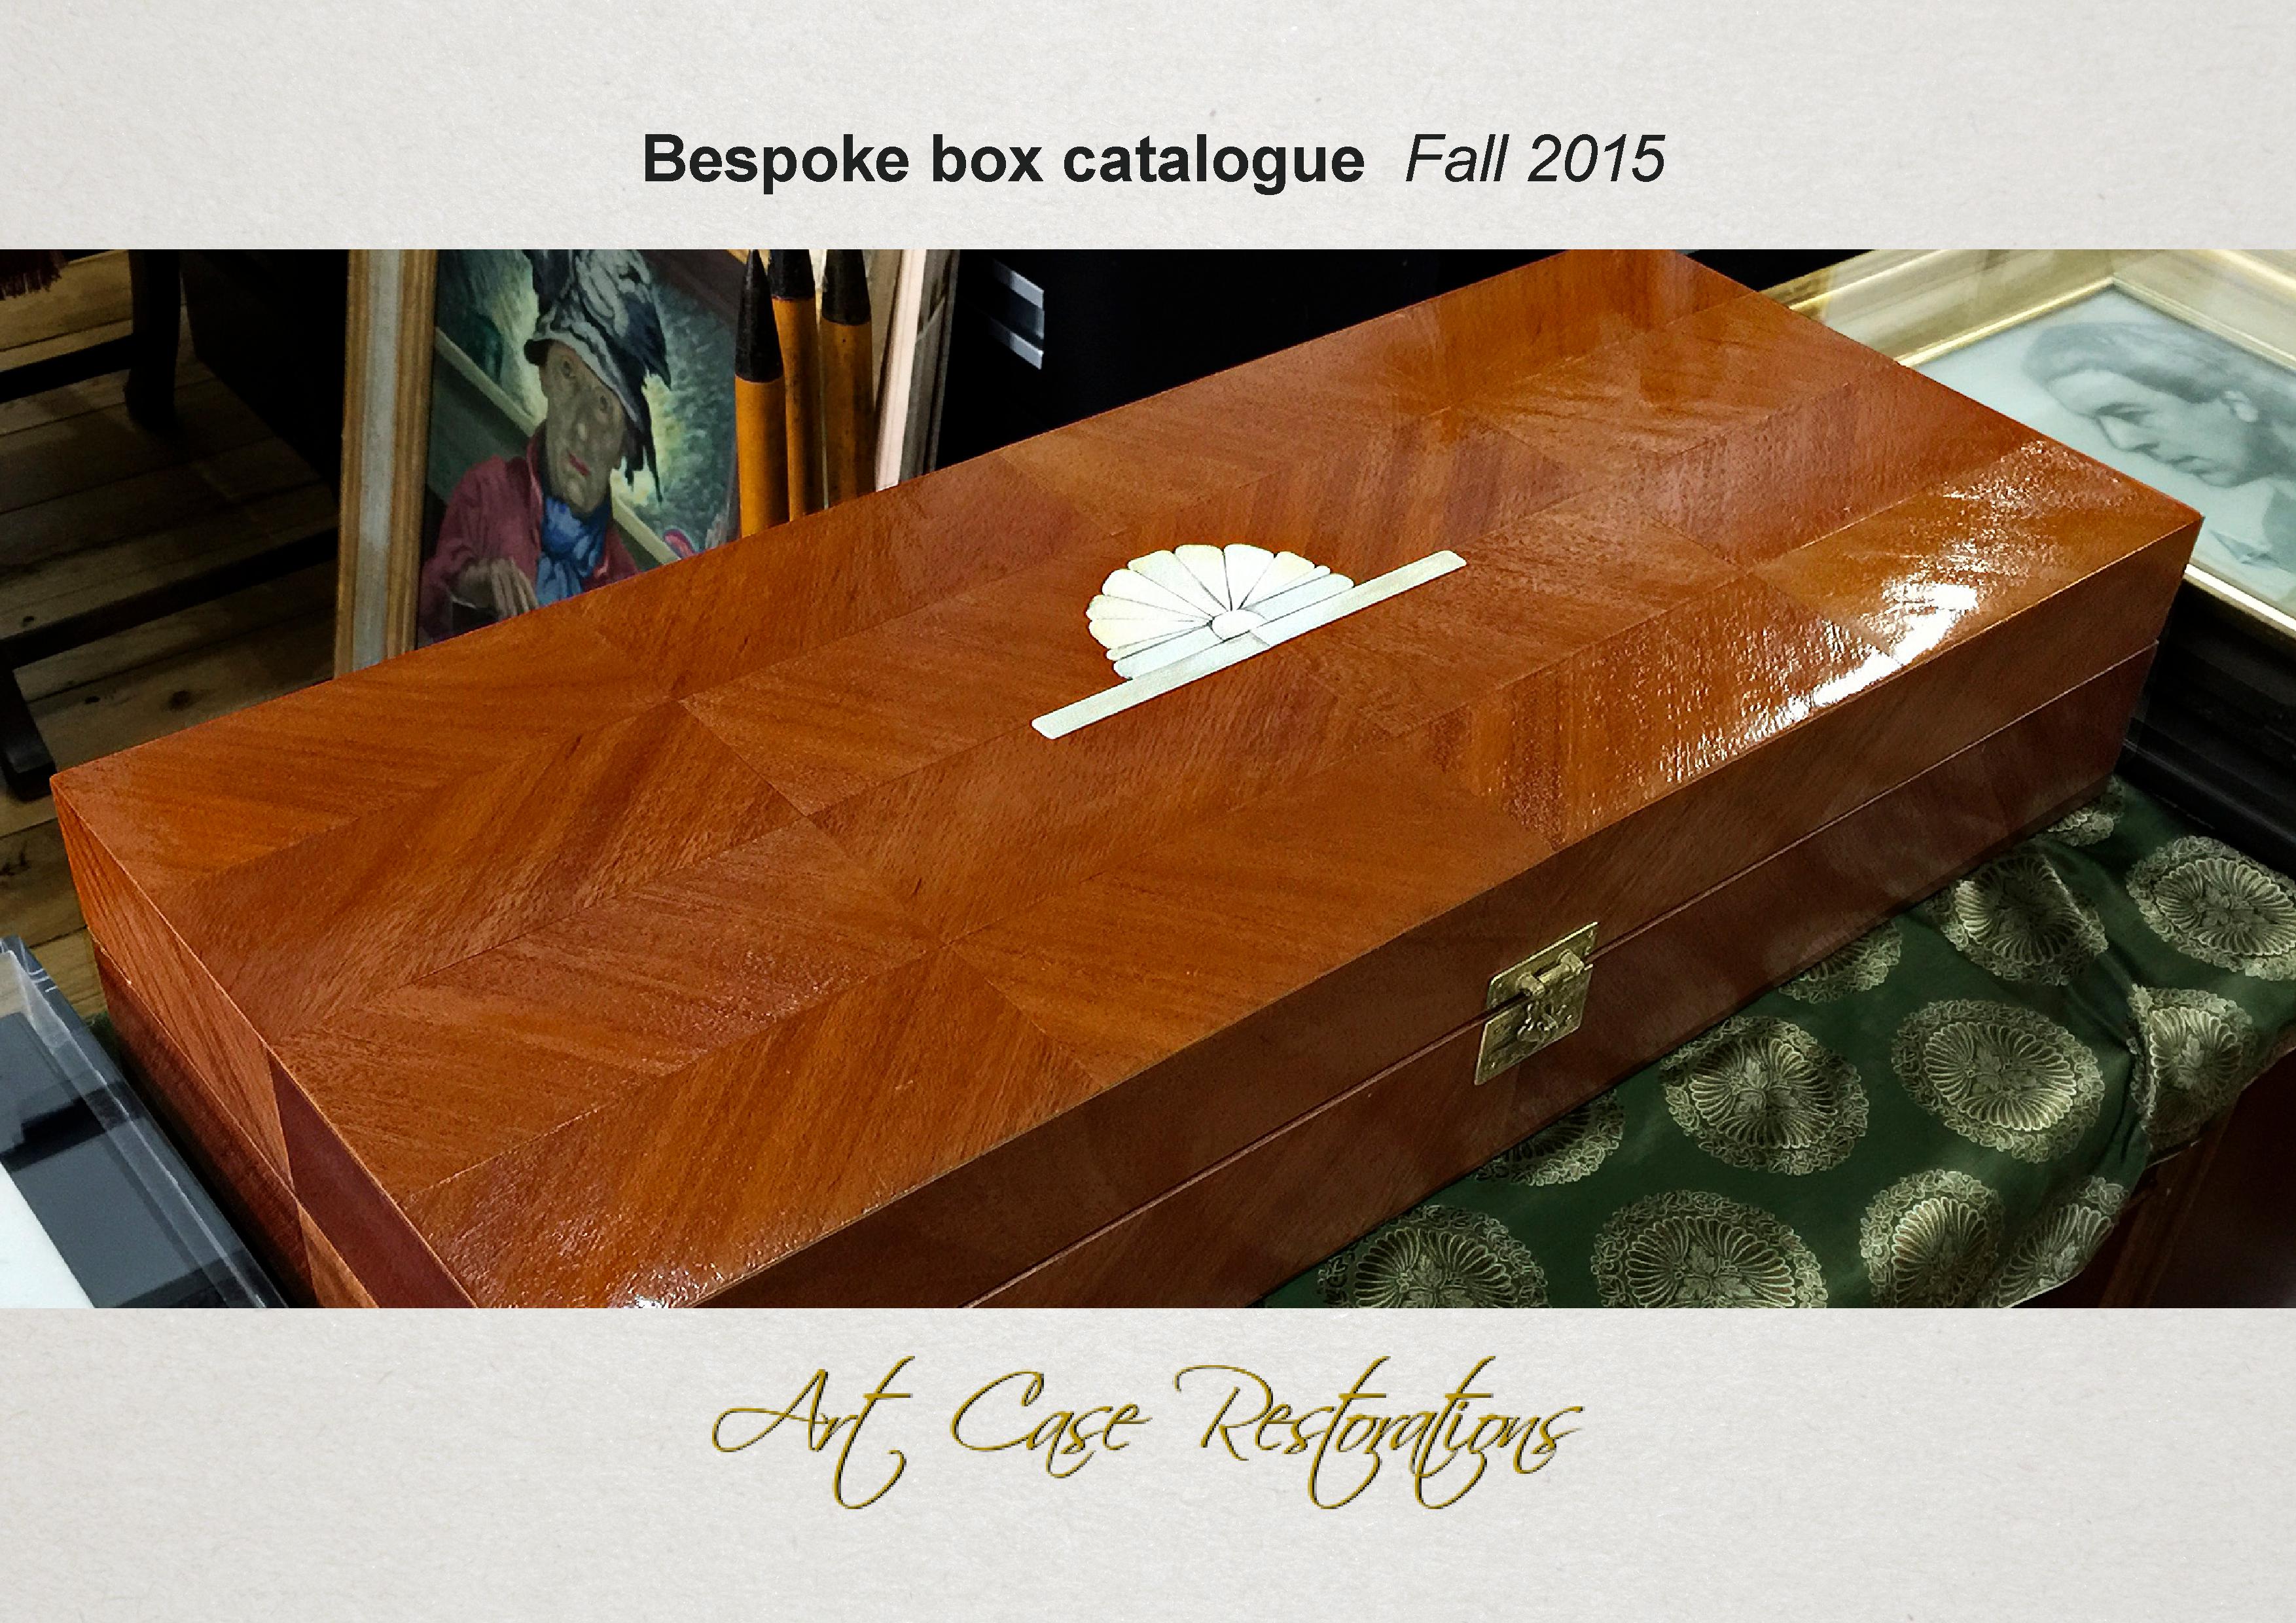 ArtCase Restoration Catalogues Bespoke box Catalogue